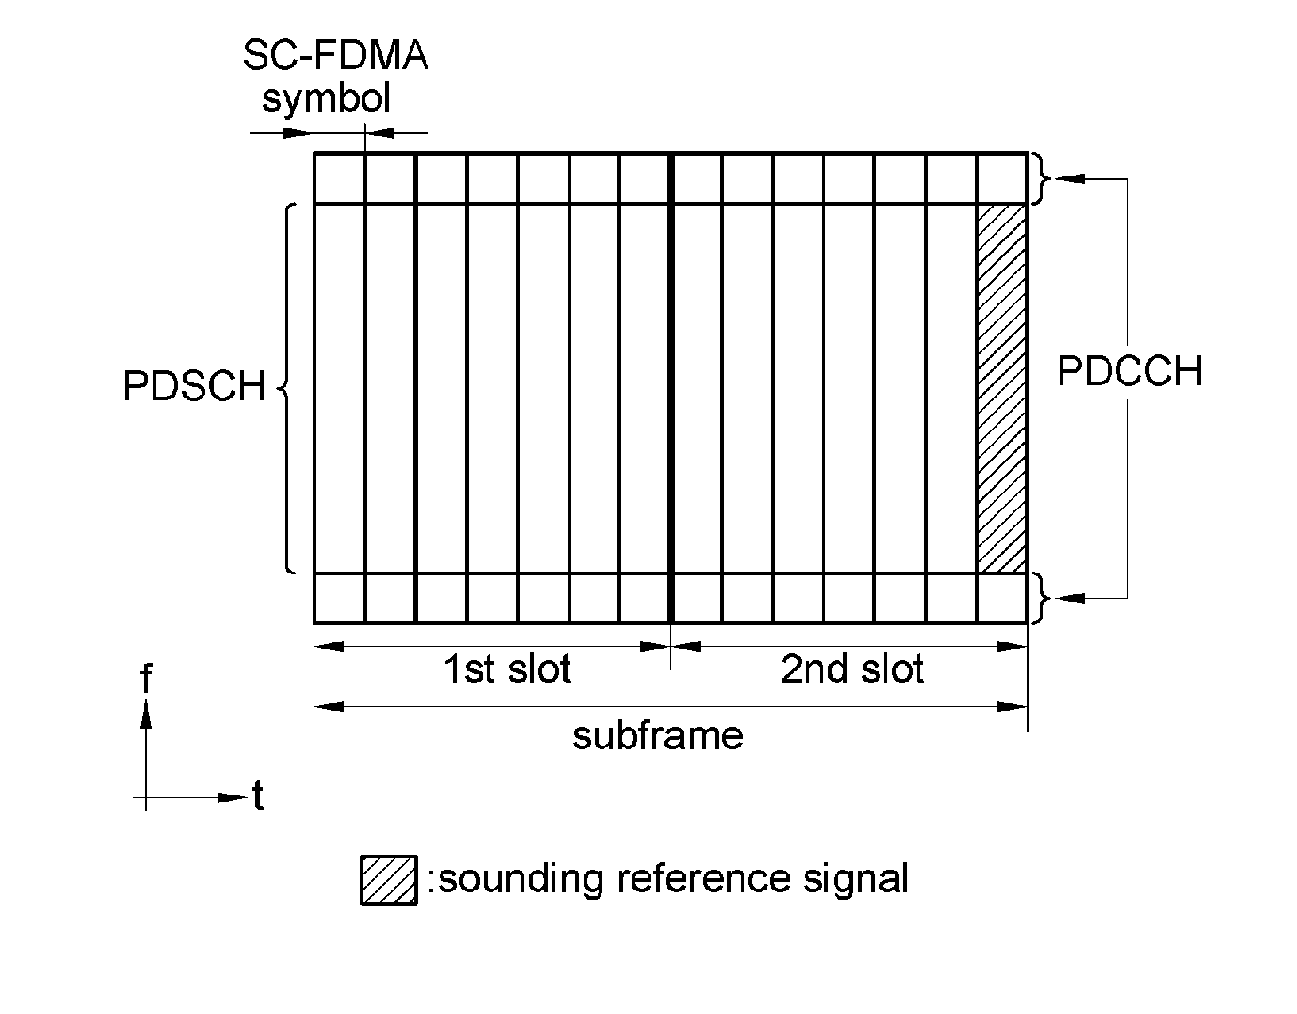 Method of transmitting sounding reference signal